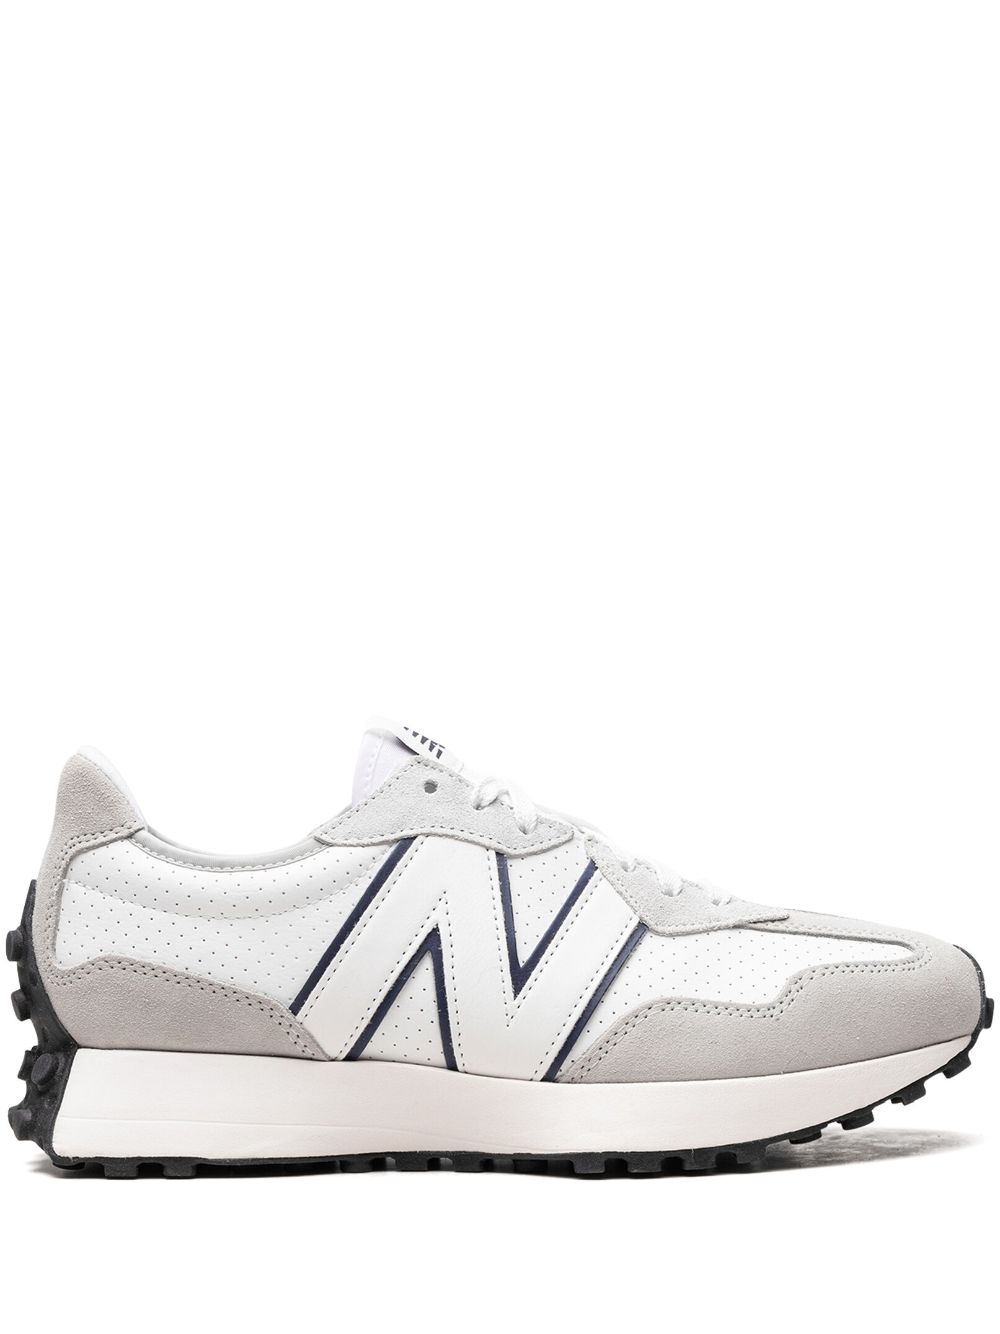 New Balance 327 "Brighton Grey/Navy" sneakers von New Balance